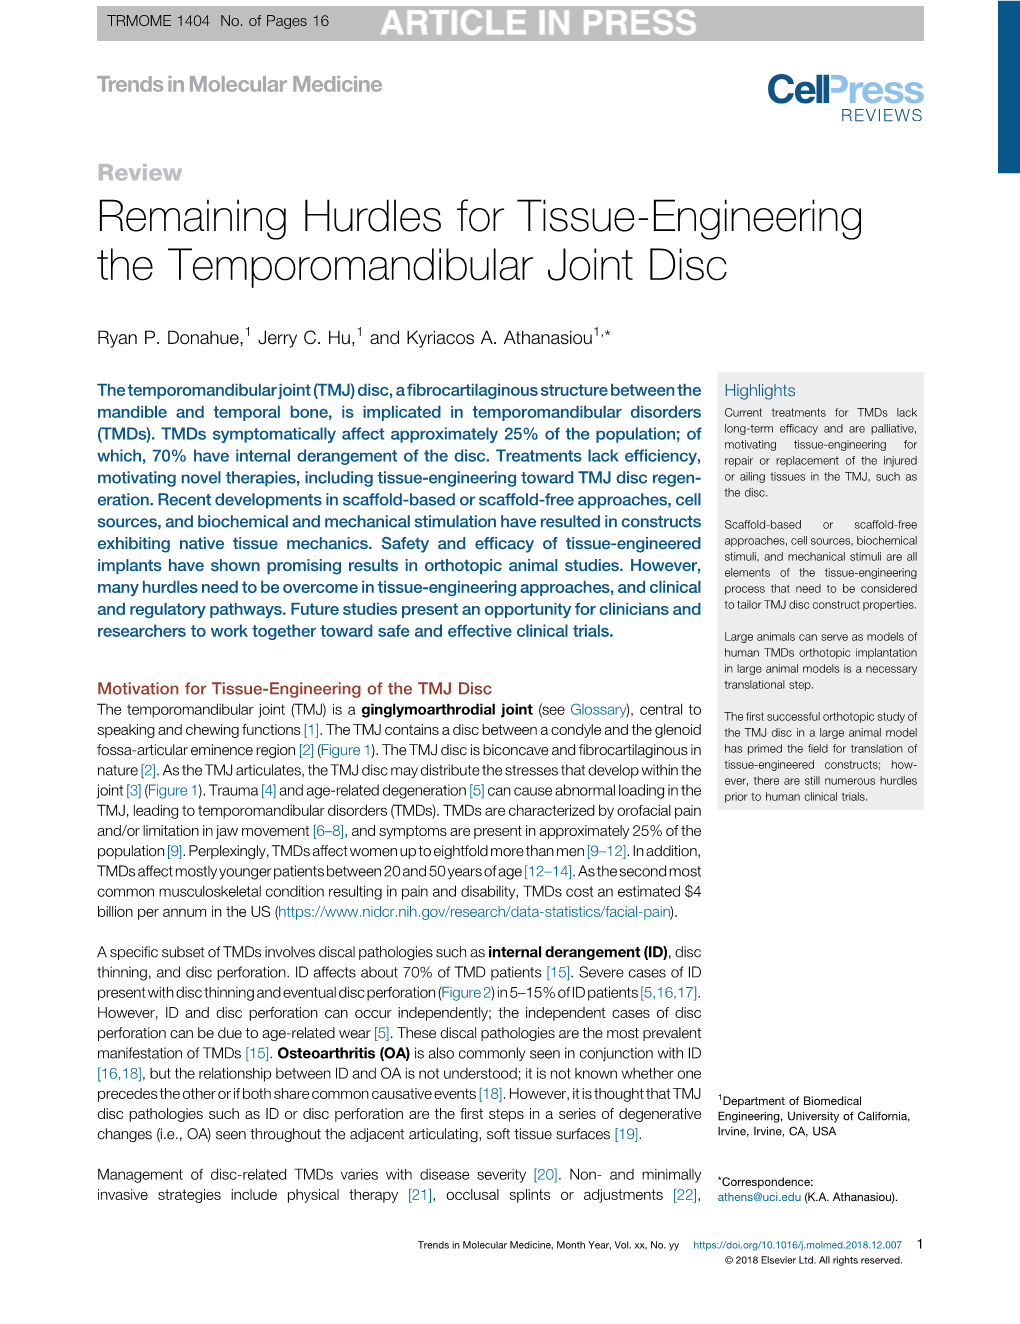 Remaining Hurdles for Tissue-Engineering the Temporomandibular Joint Disc